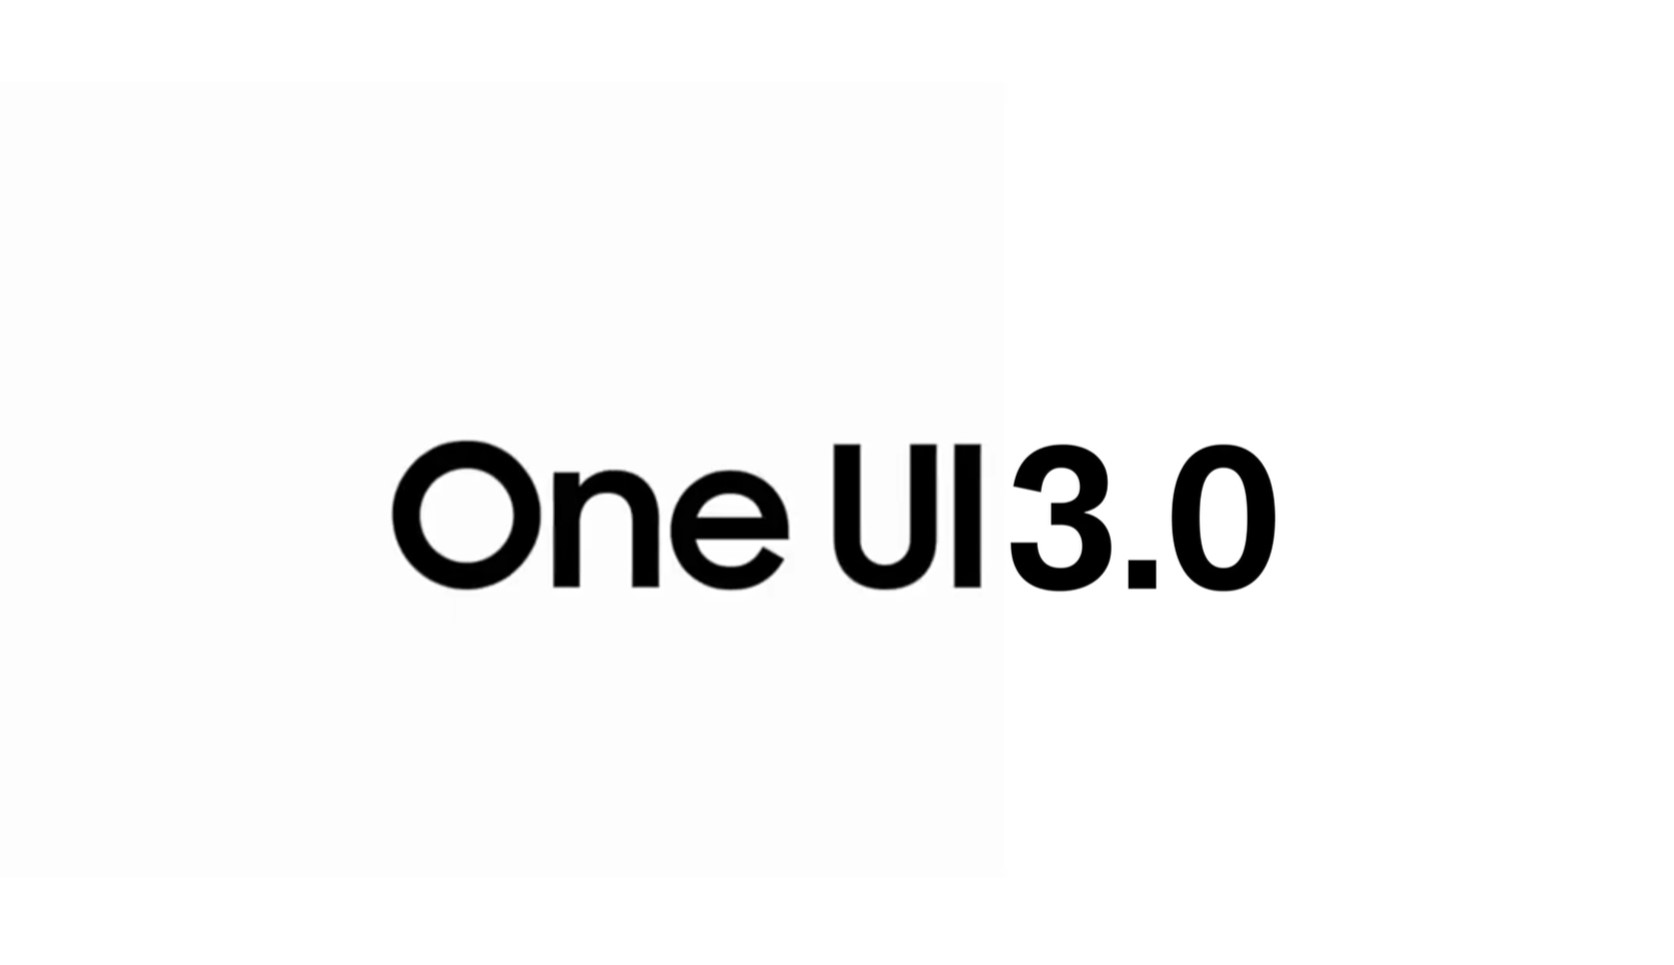 Samsung One UI 3.0 Android 11 OTA downloads